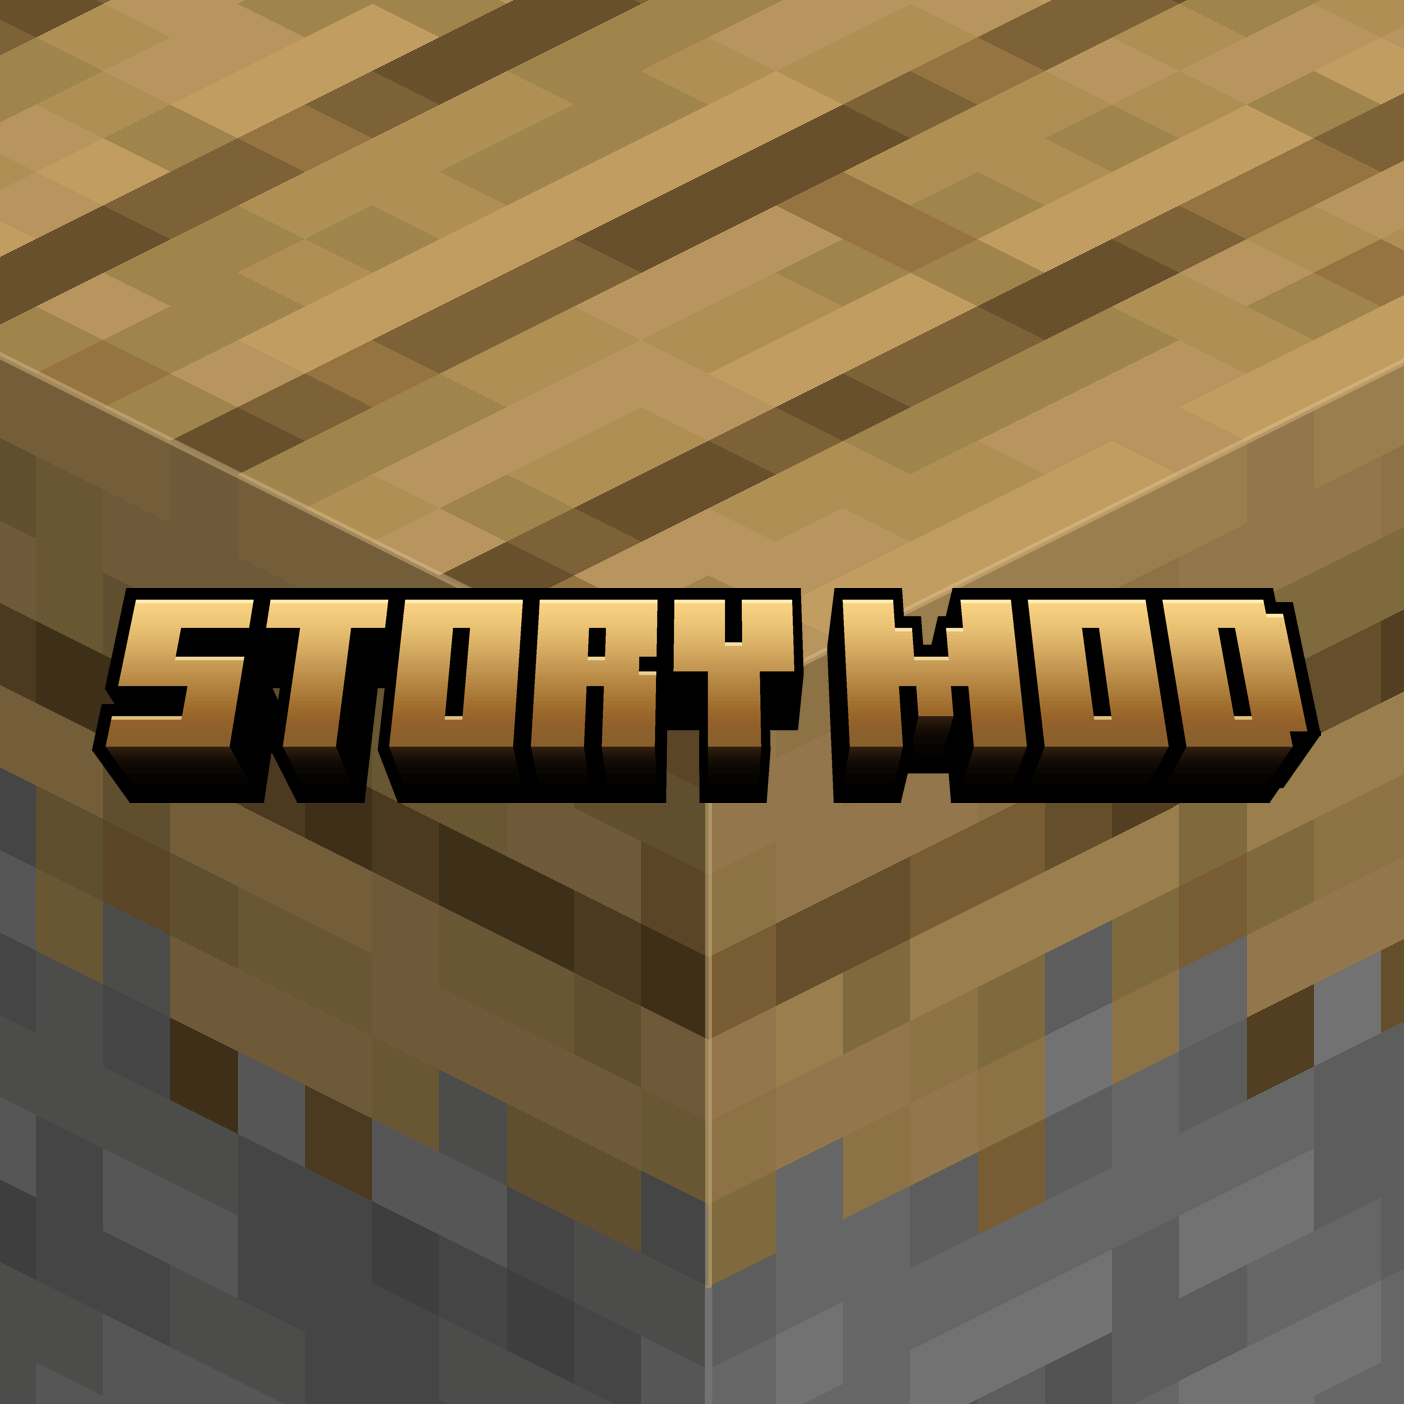 MC Story Mode Remastered - Minecraft Modpacks - CurseForge